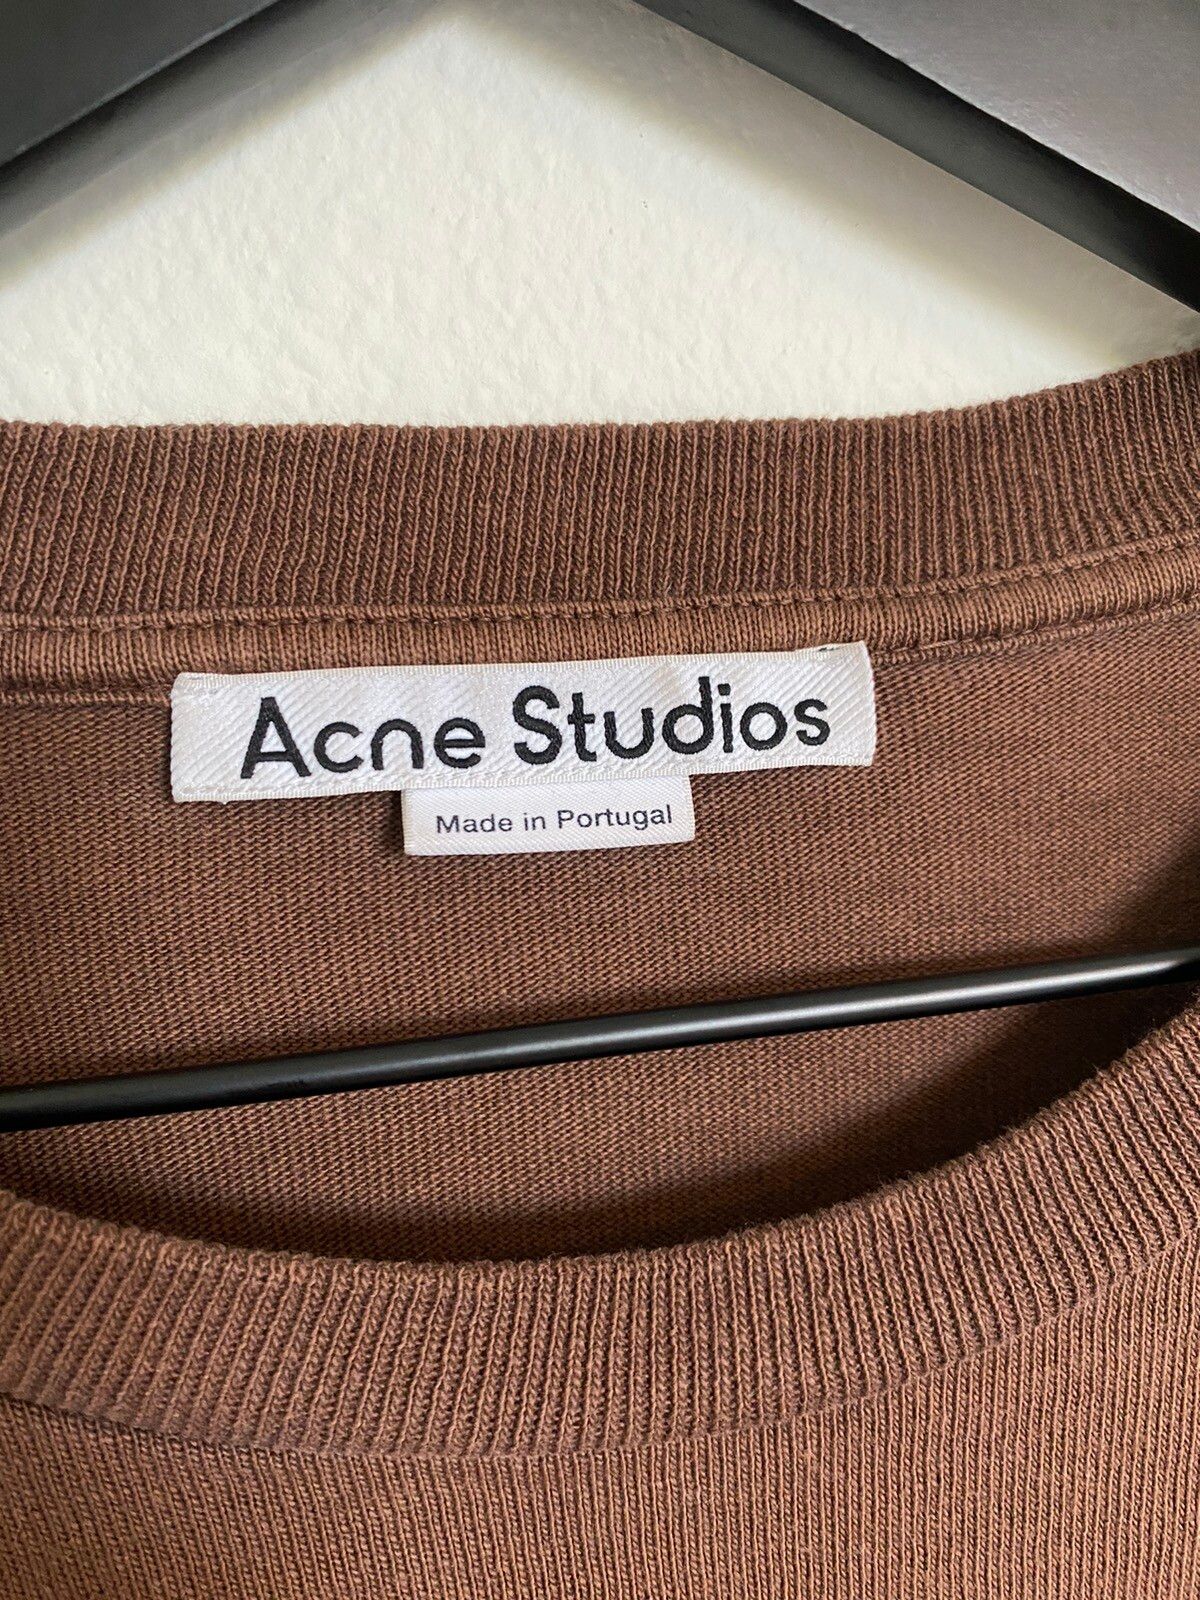 Acne Studios Acne Studios Edlund Circle Oversized T-Shirt Embroidered Size US L / EU 52-54 / 3 - 5 Thumbnail